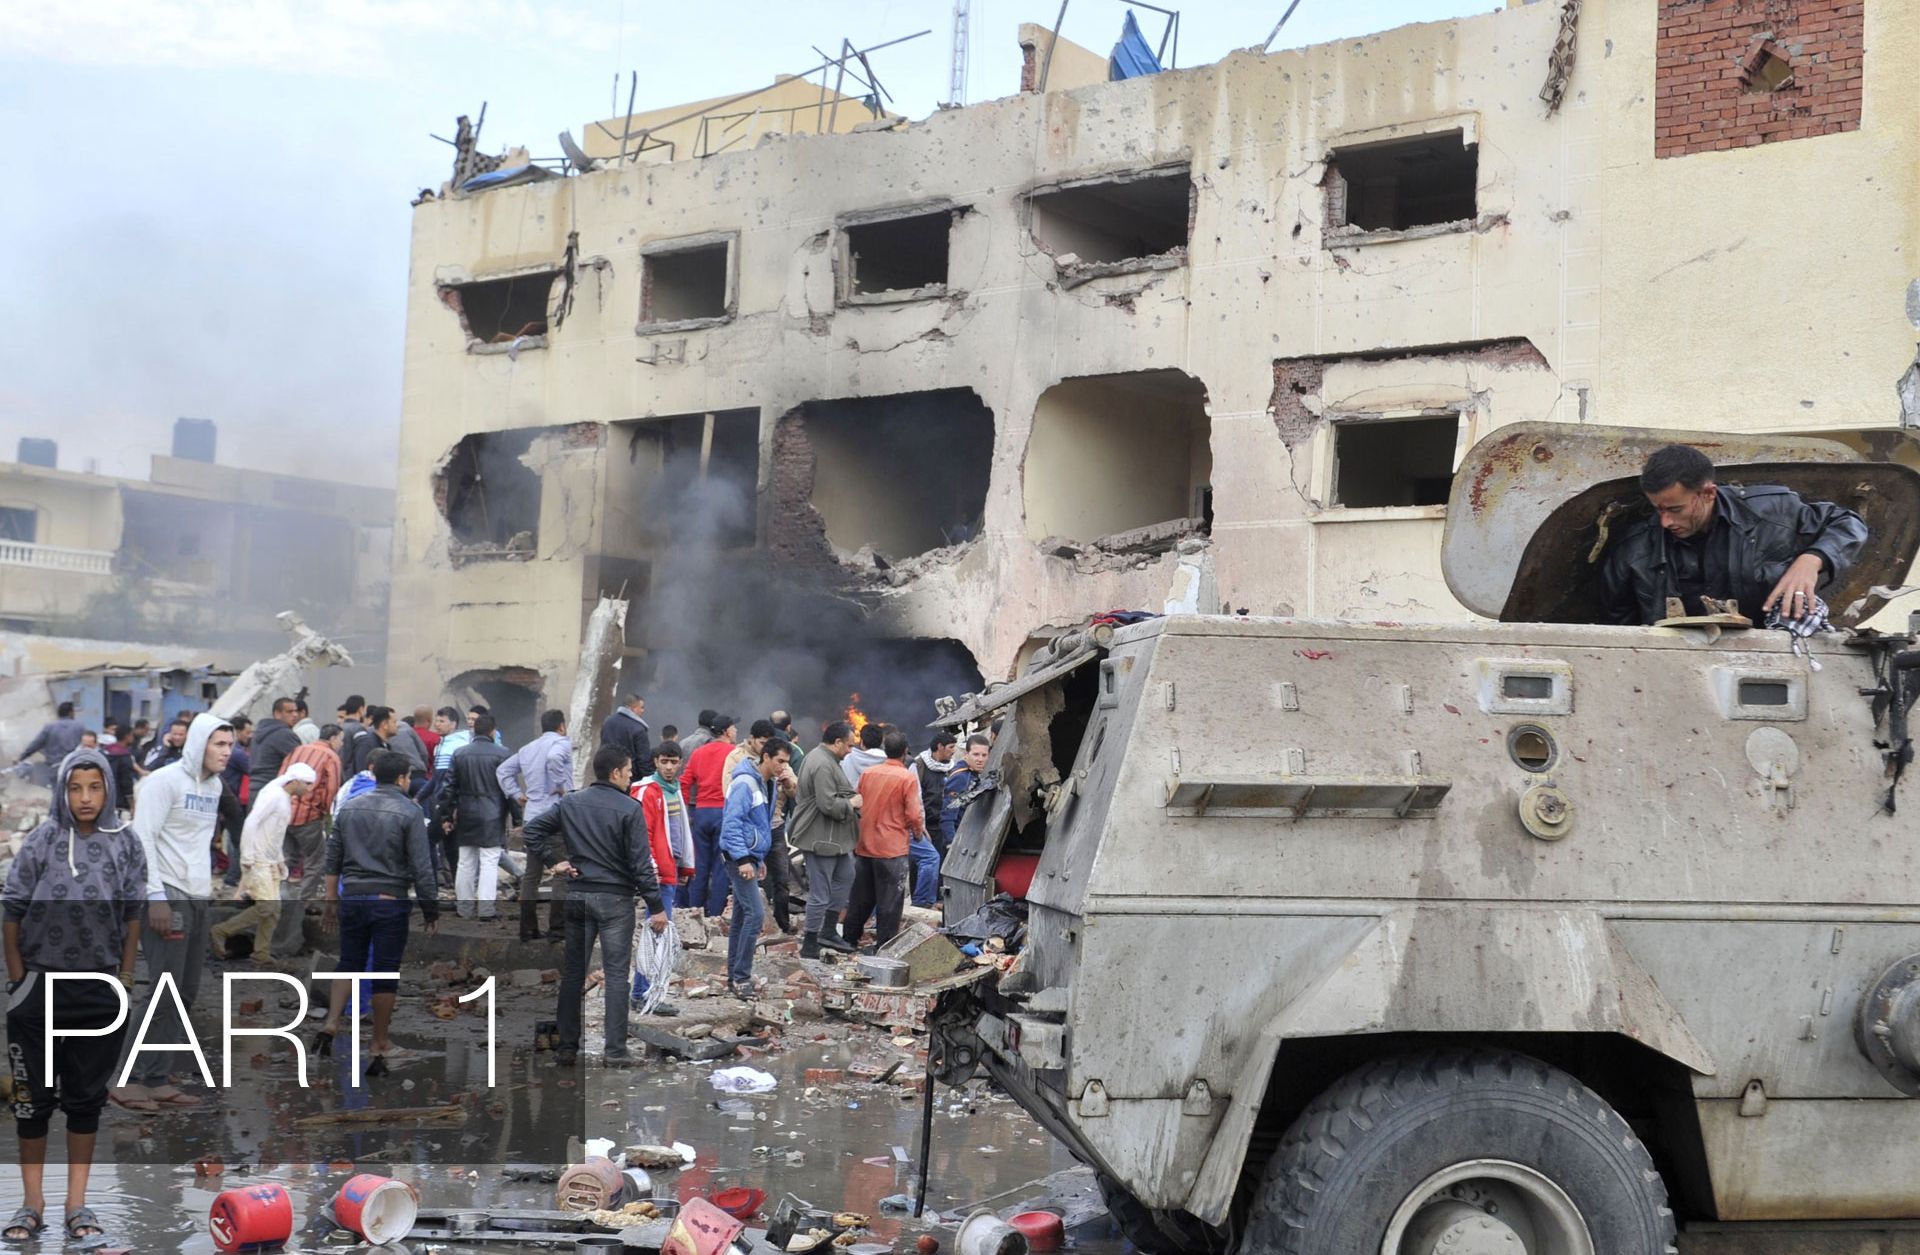 Examining the Jihadist Threat in Egypt